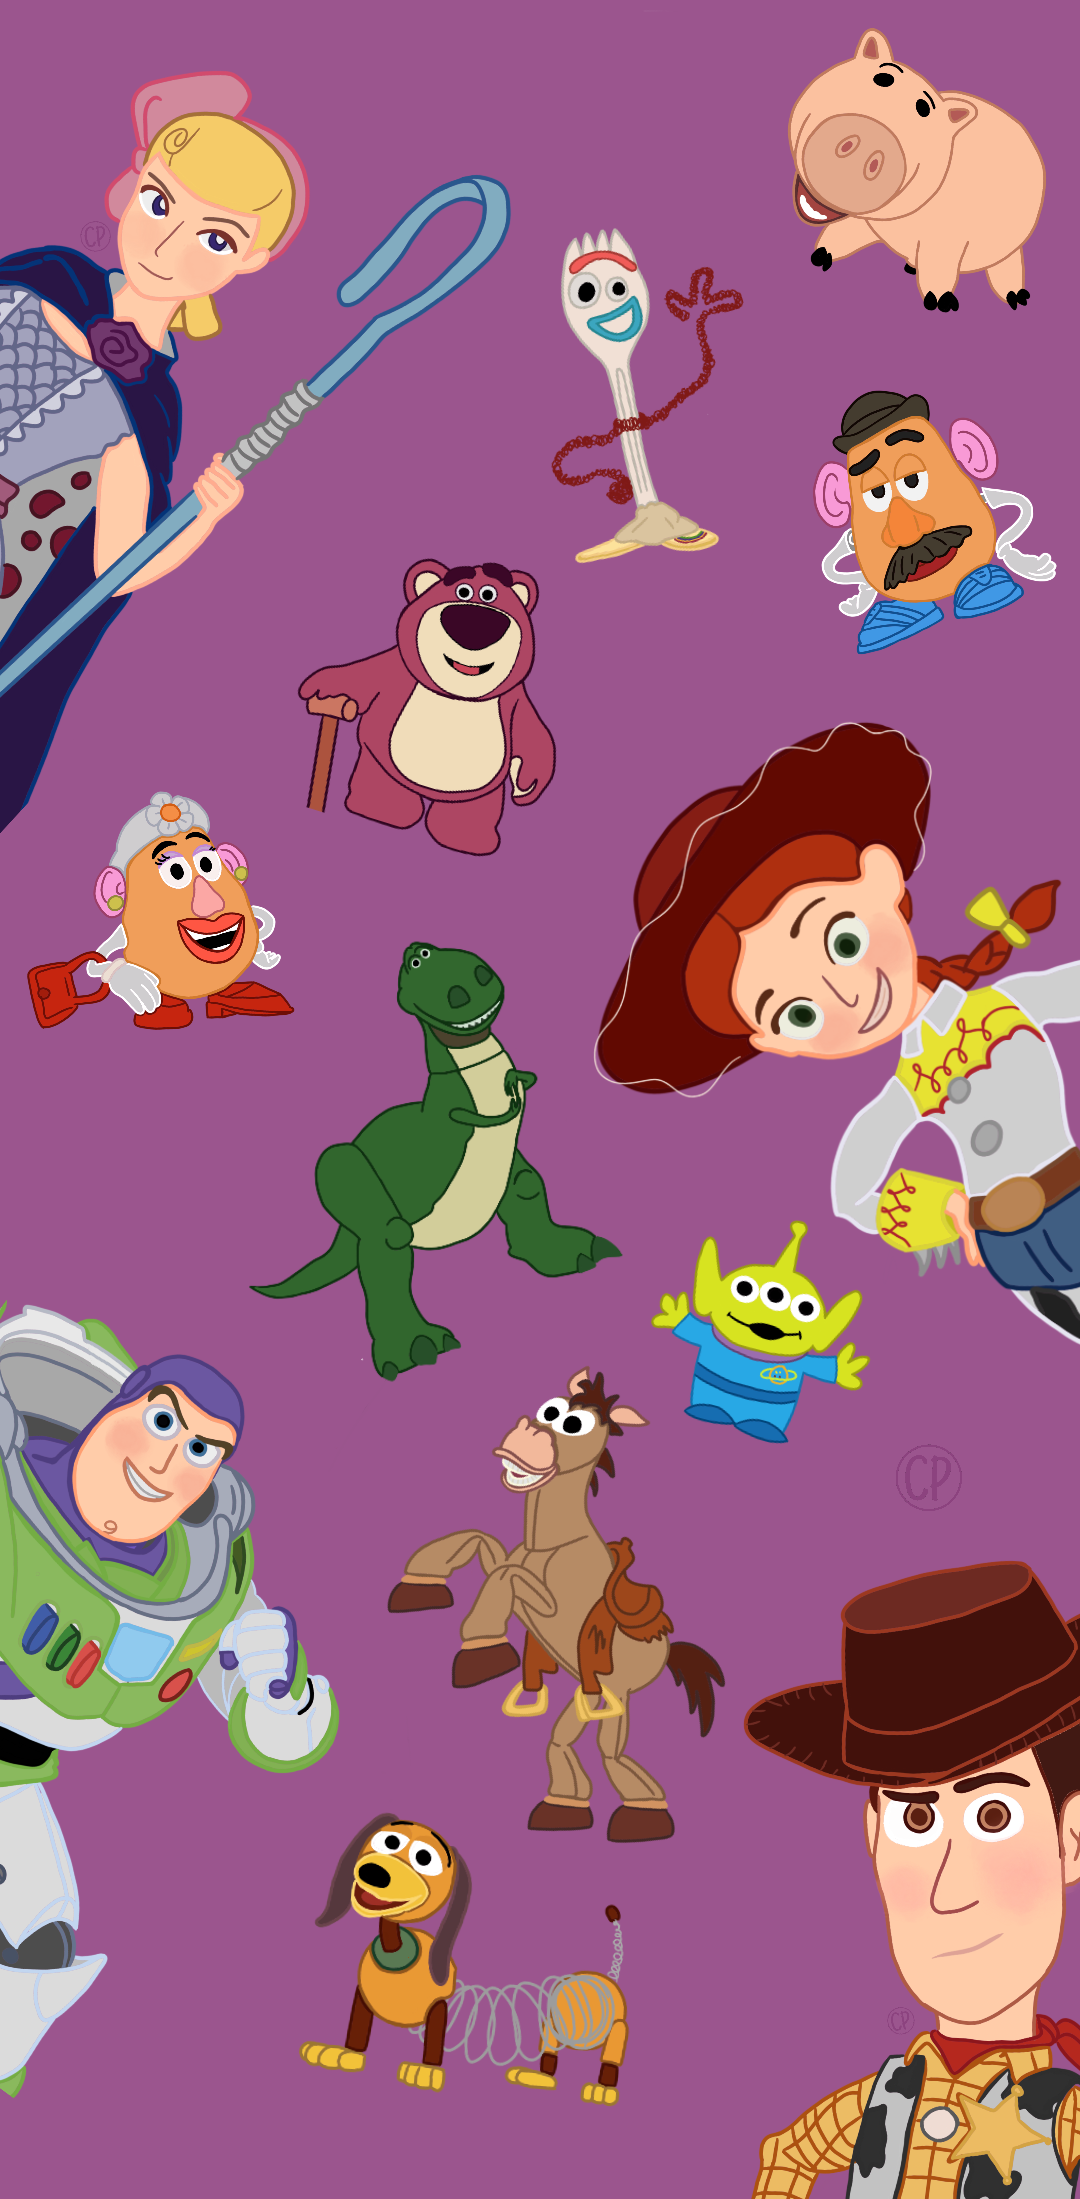 Pin oleh Syeni Vircilla Brazillia di Toy Story di 2020. Animasi disney, Kartun disney, Kartun